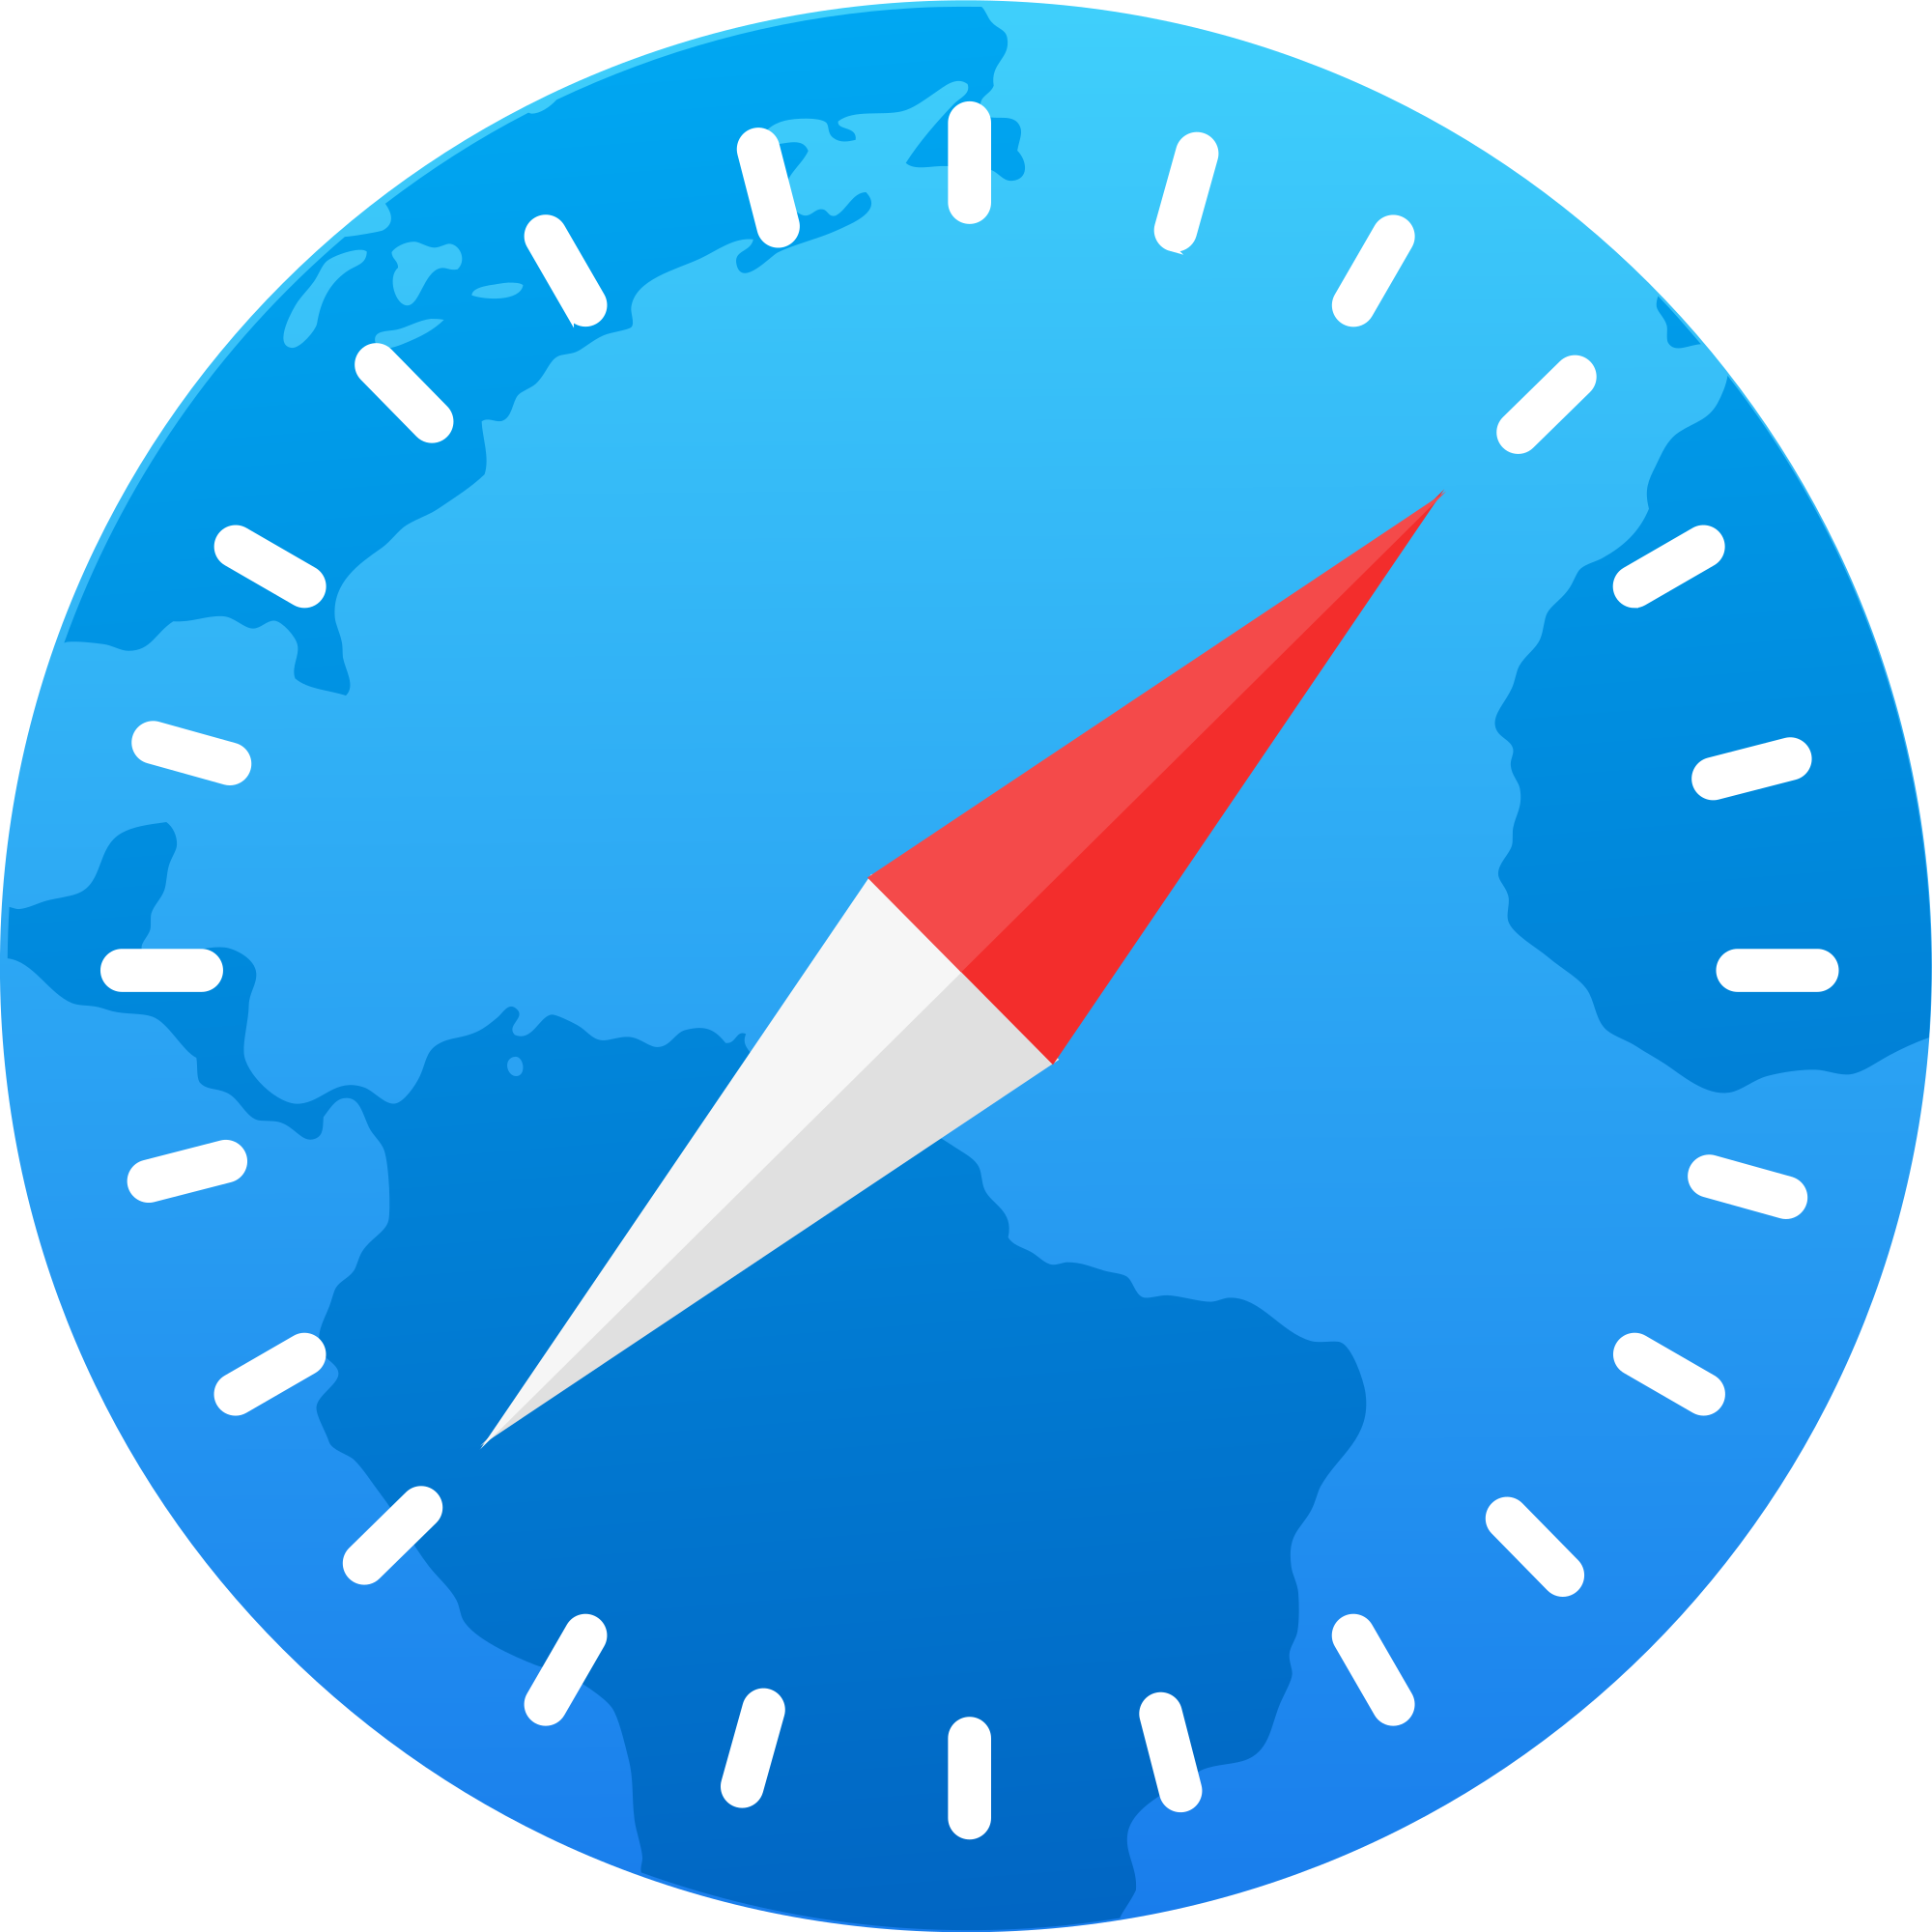 Safari logo and icon for Mac